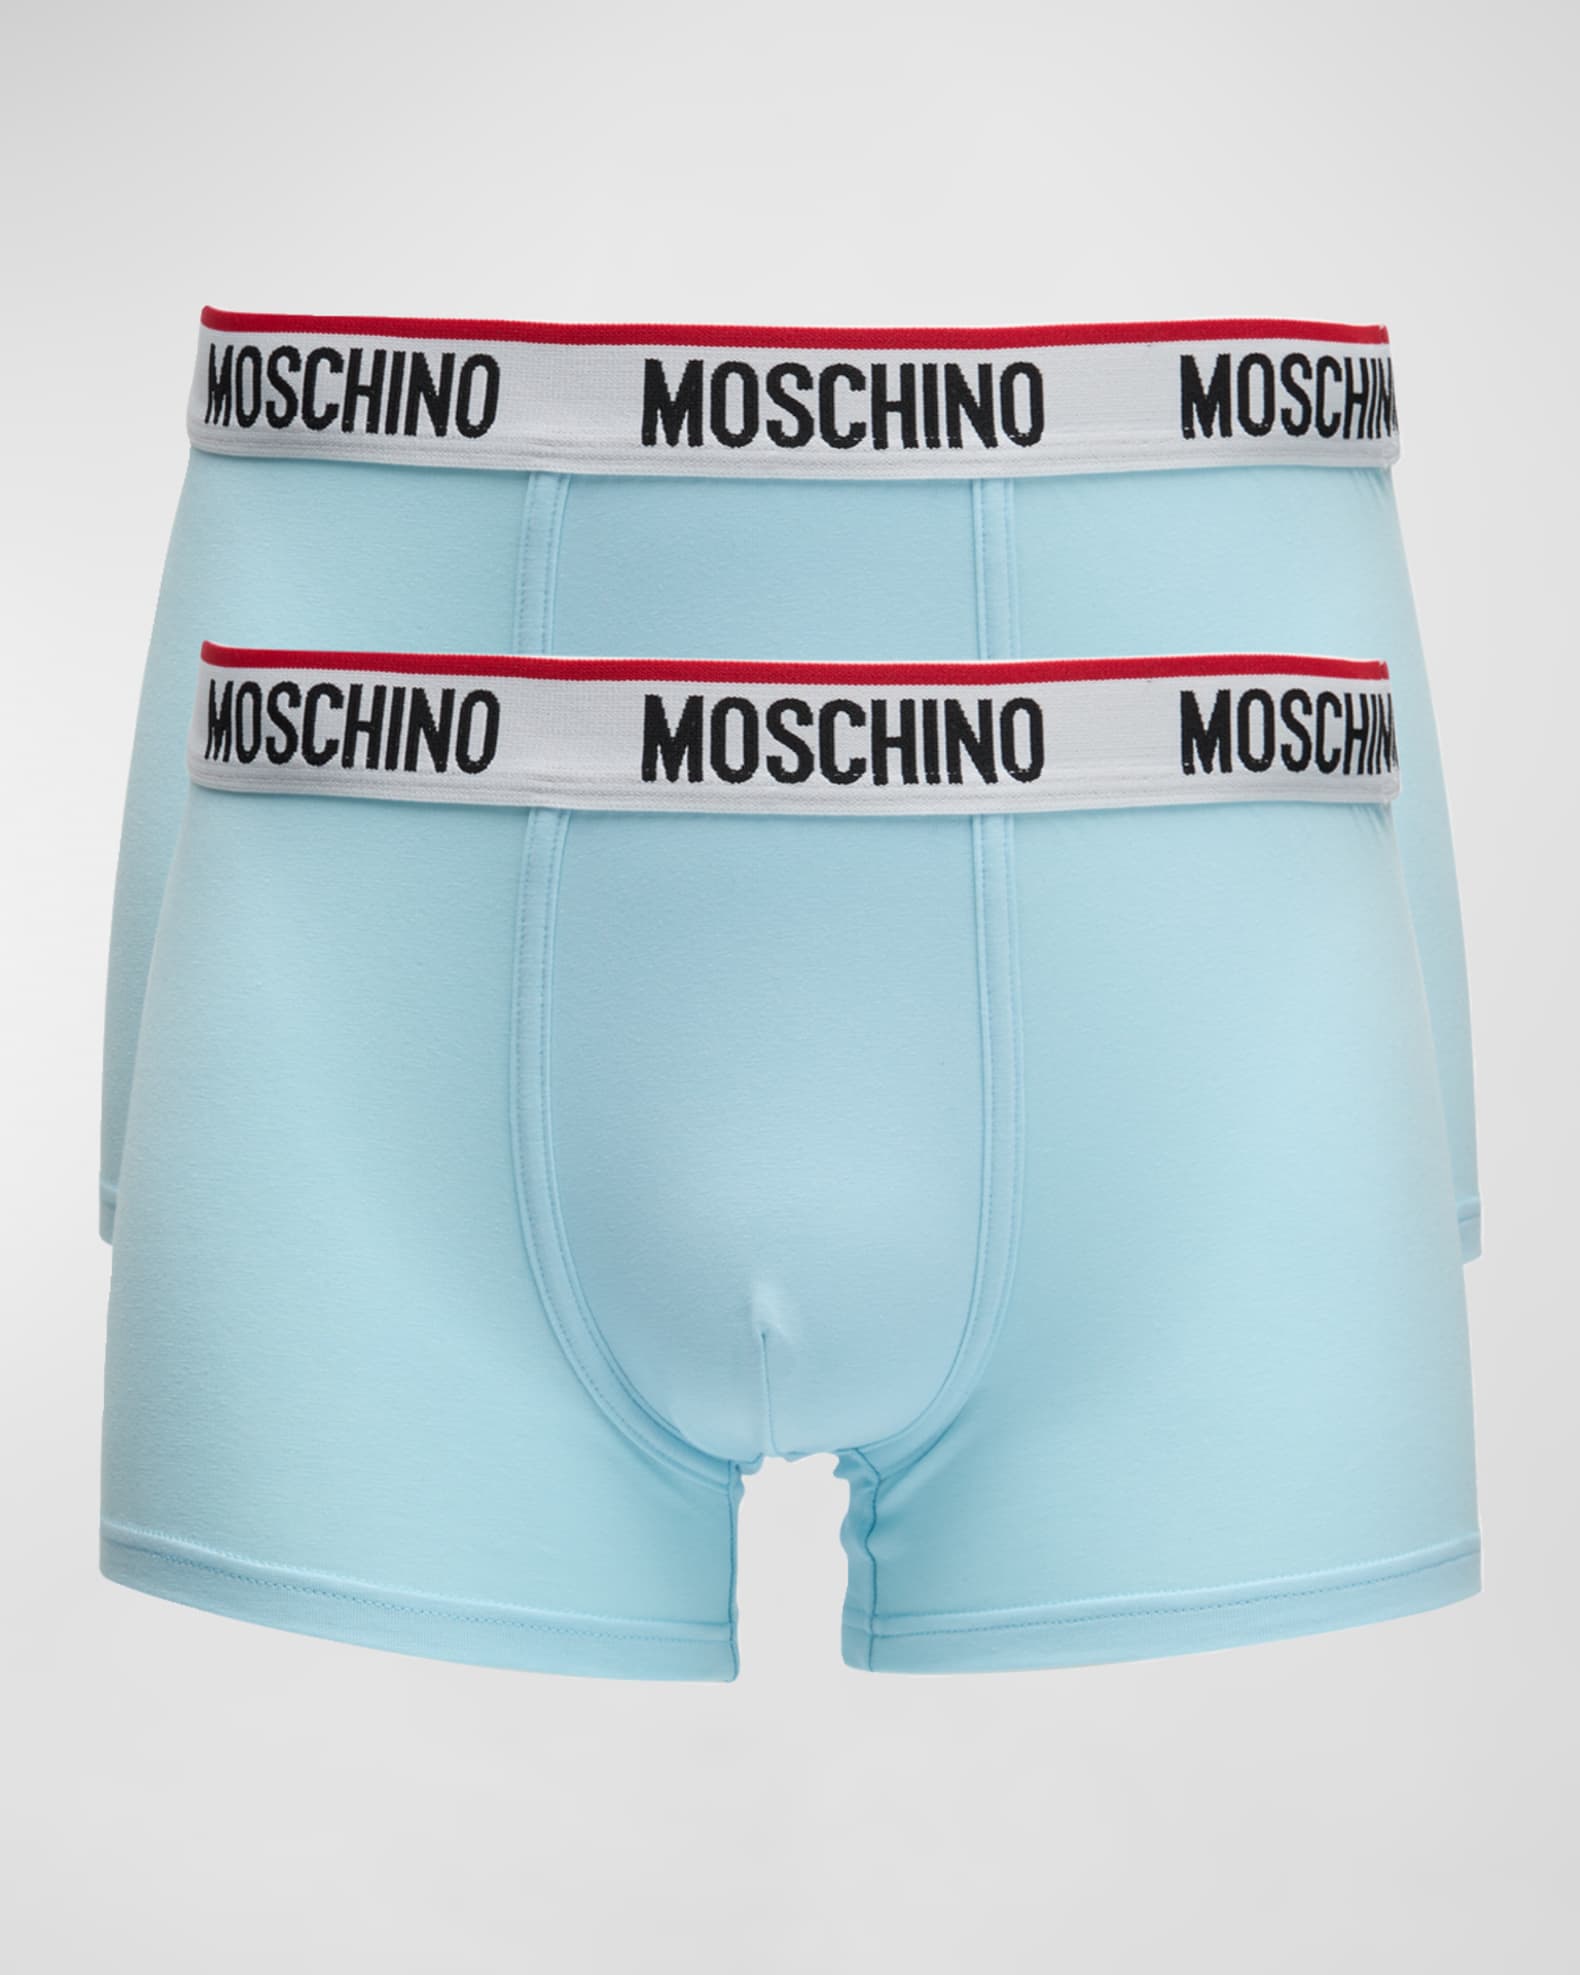 Moschino Men's 2-Pack Basic Boxer Briefs